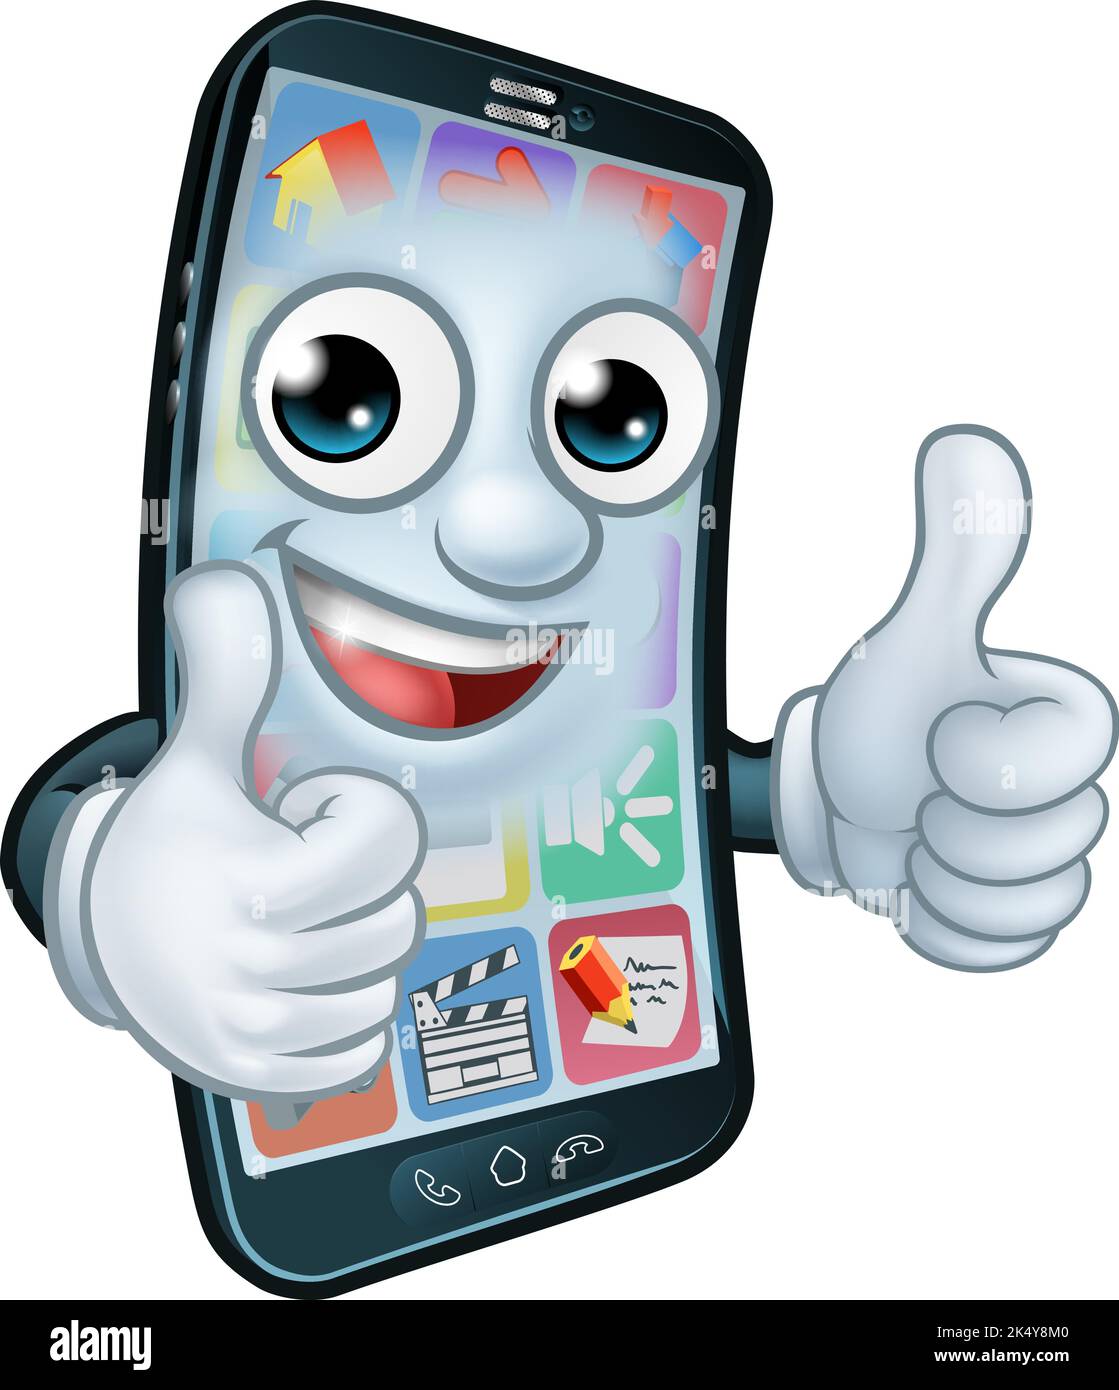 Mobile Phone Thumbs Up Cartoon Mascot Stock Vector